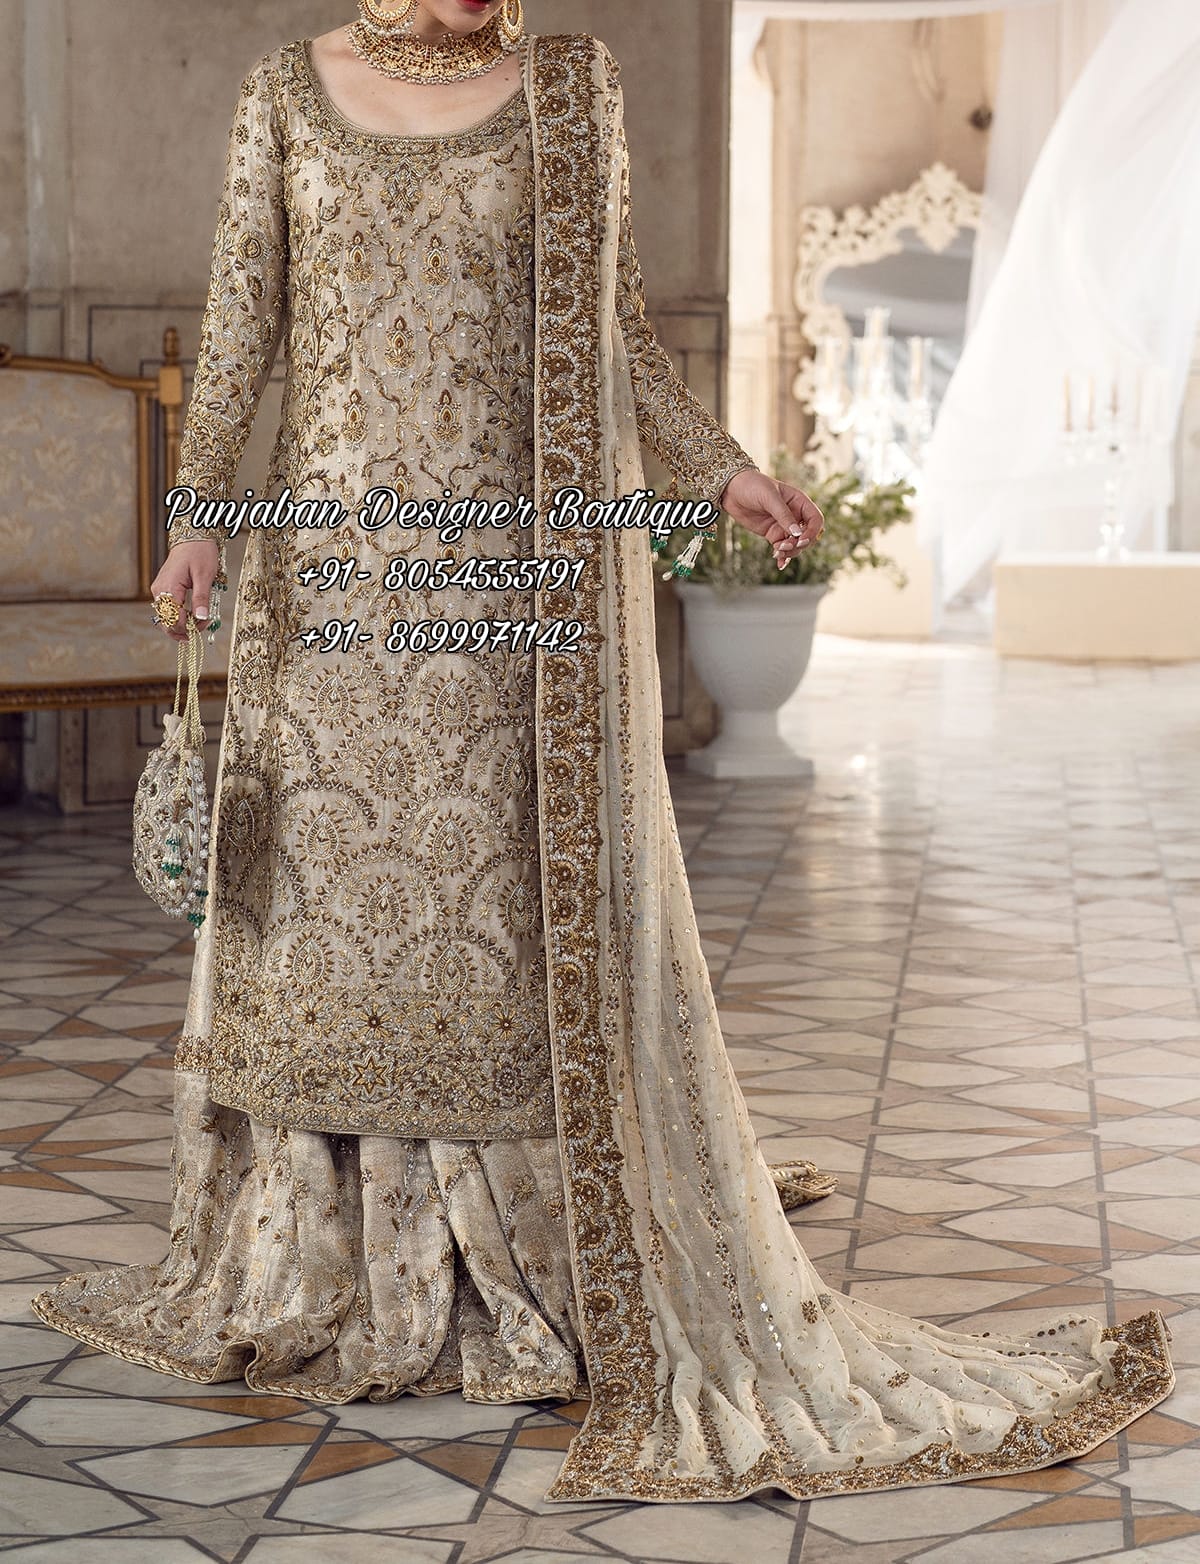 Punjabi Suit Neck Design Front | Punjaban Designer Boutique